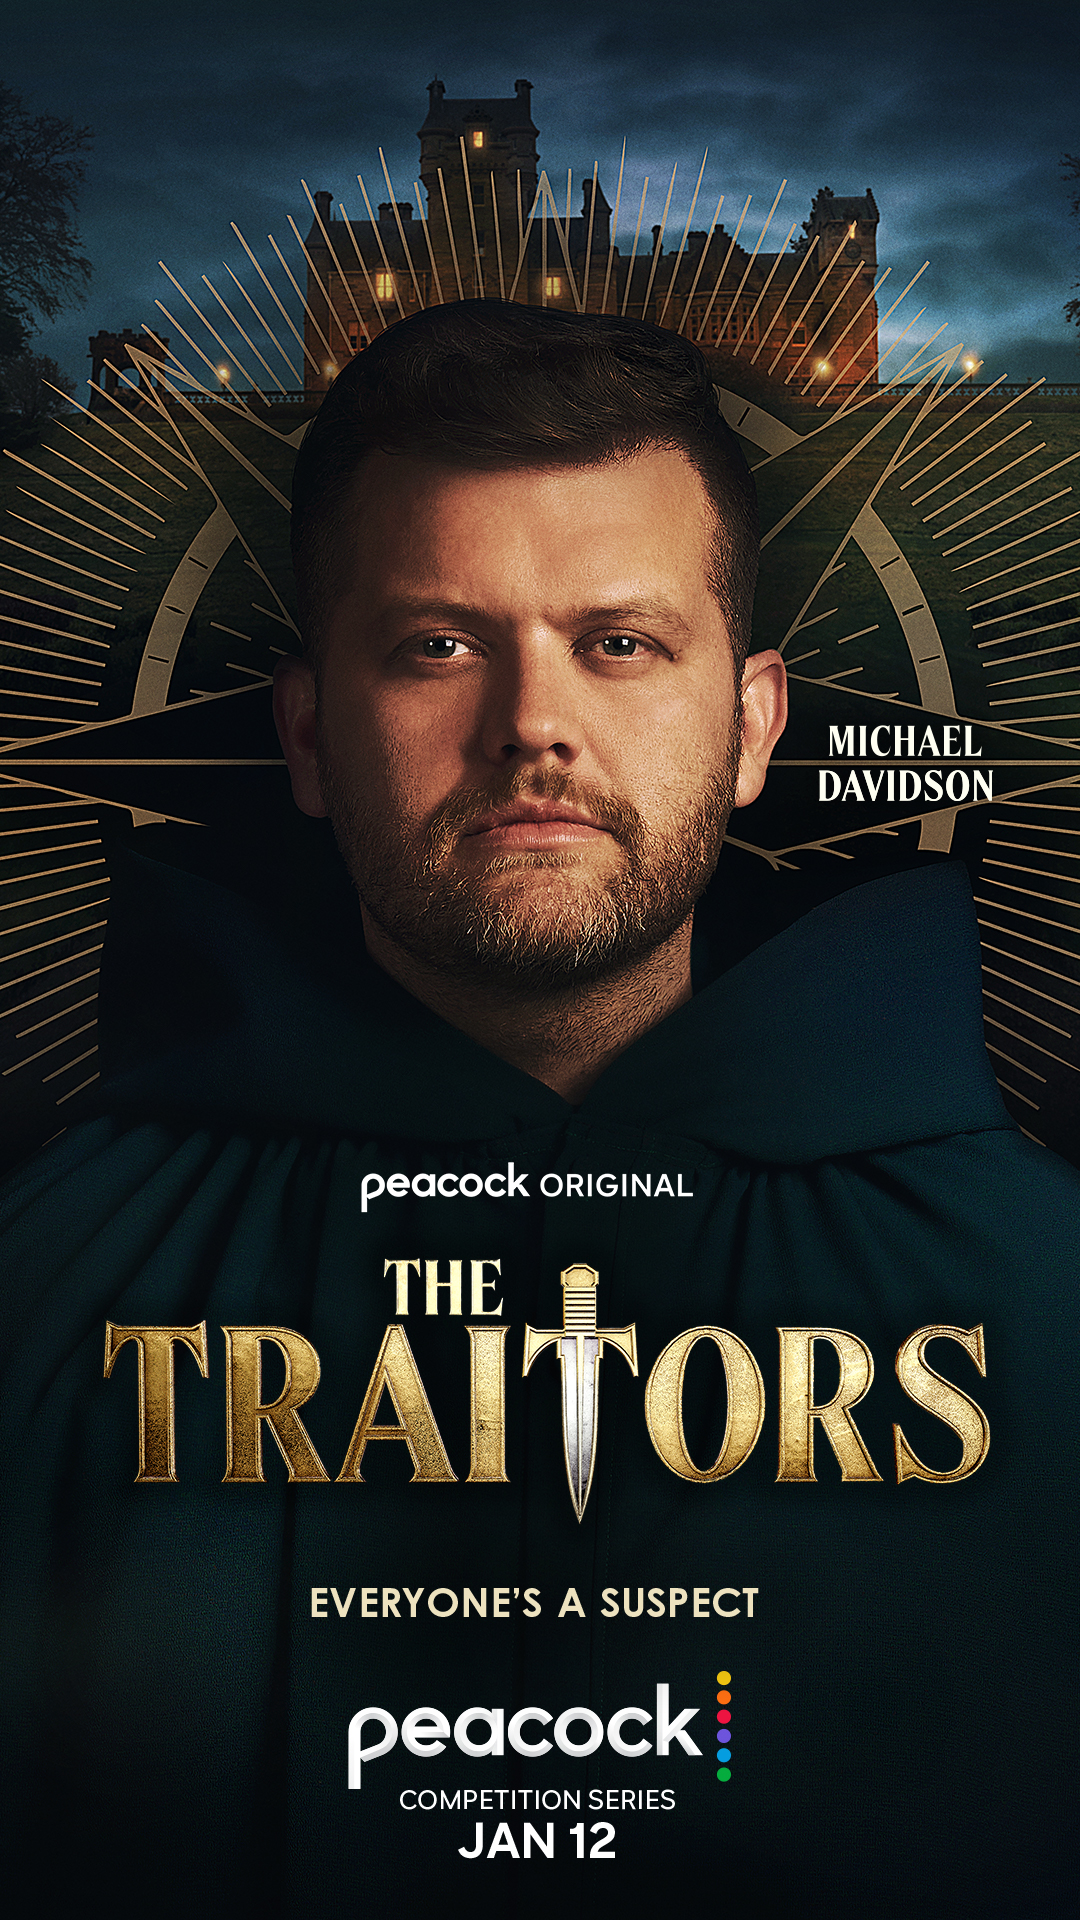 Michael Davidson for 'The Traitors'